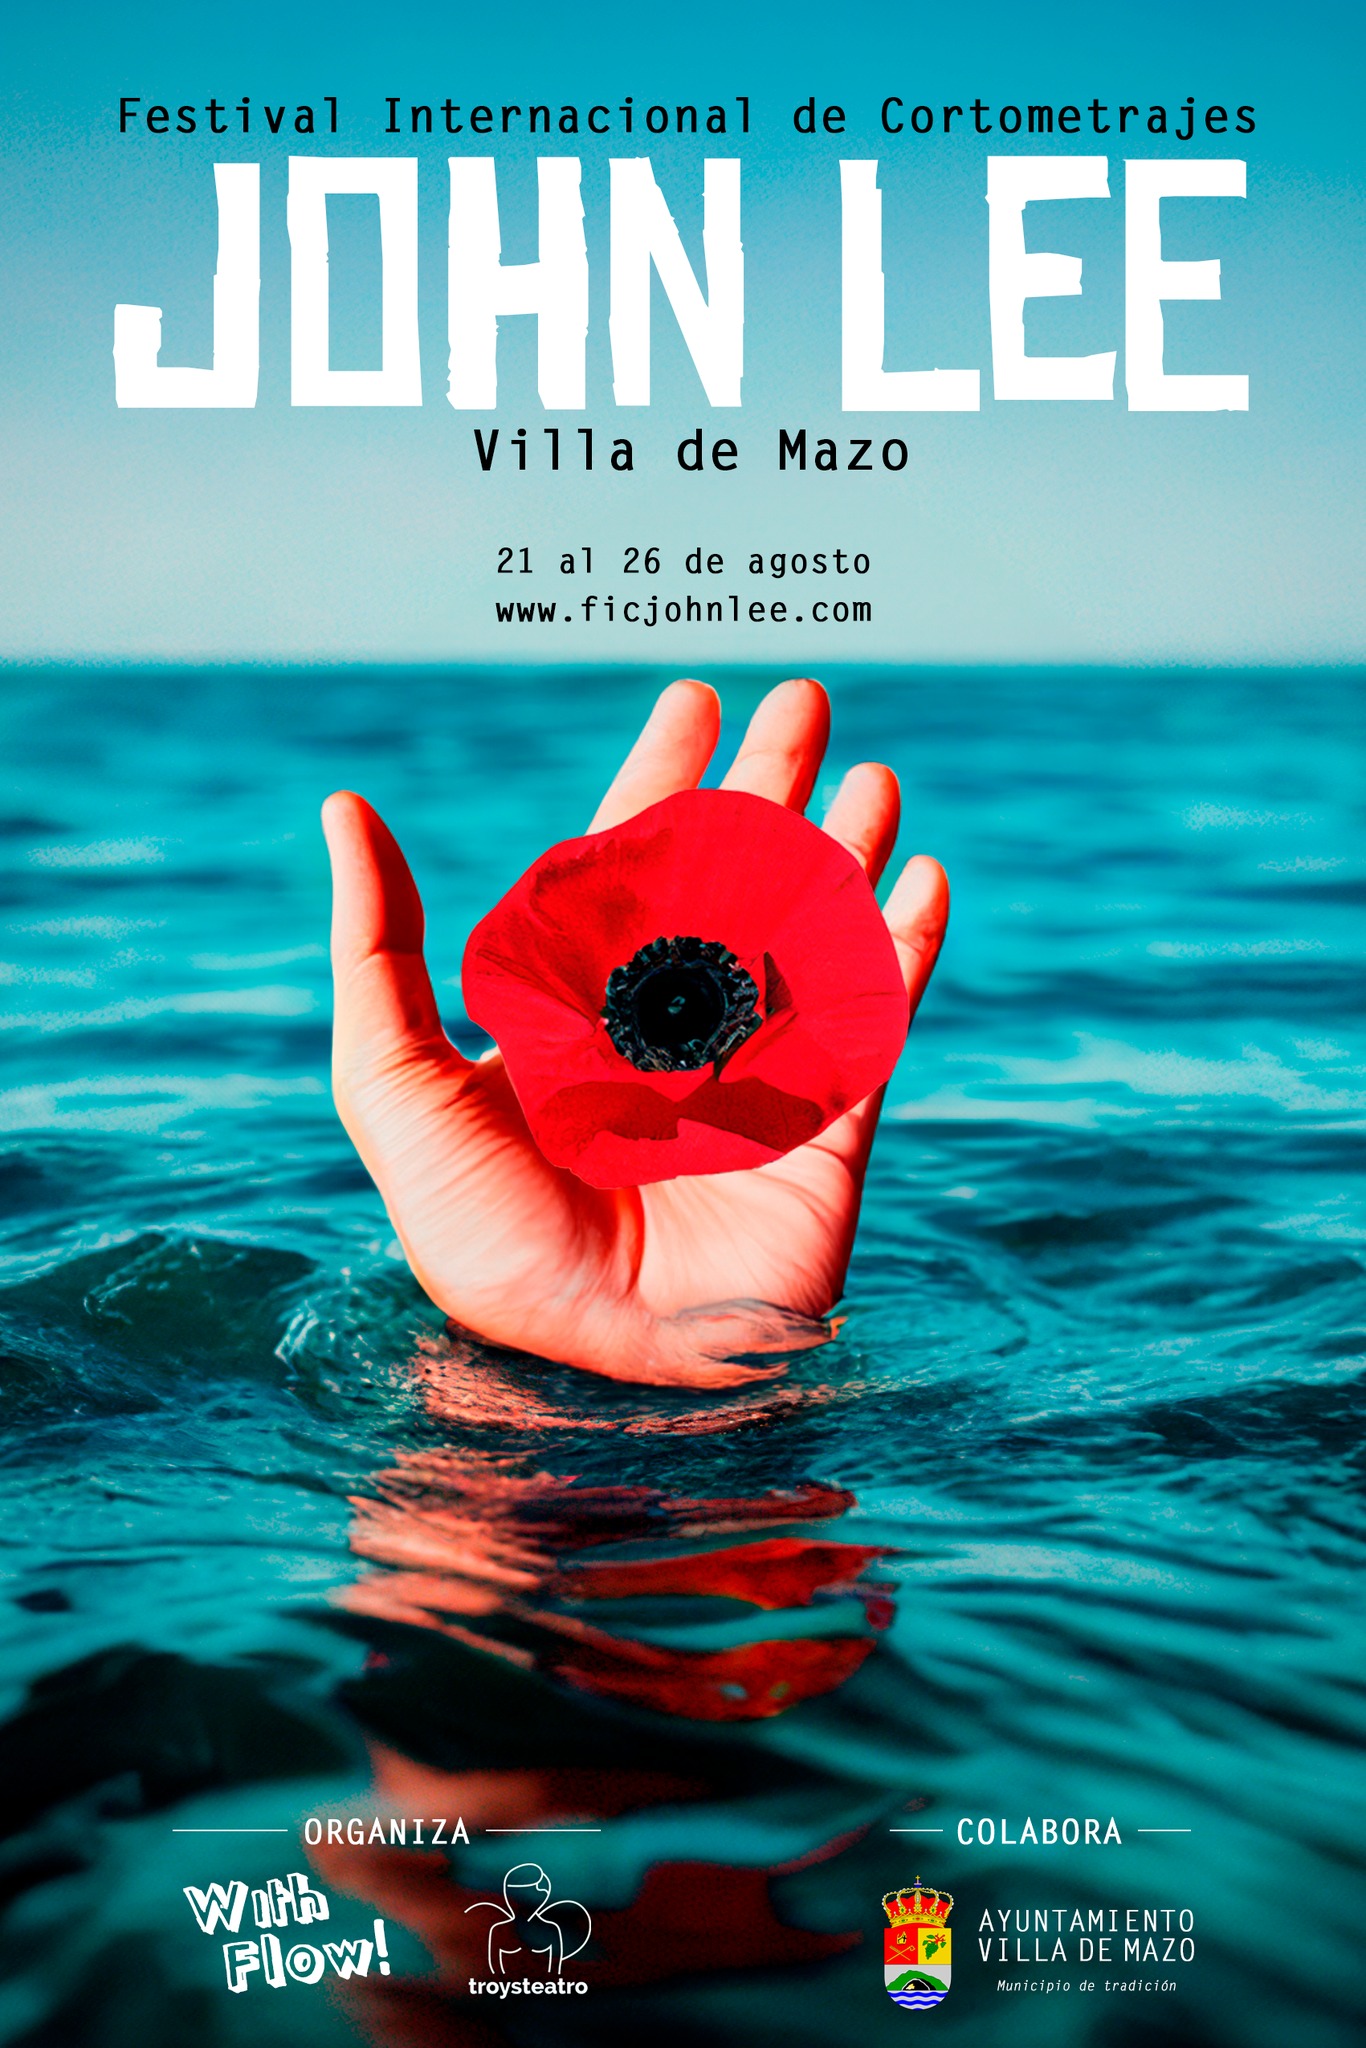 El Festival Internacional de Cortometrajes John Lee - Villa de Mazo